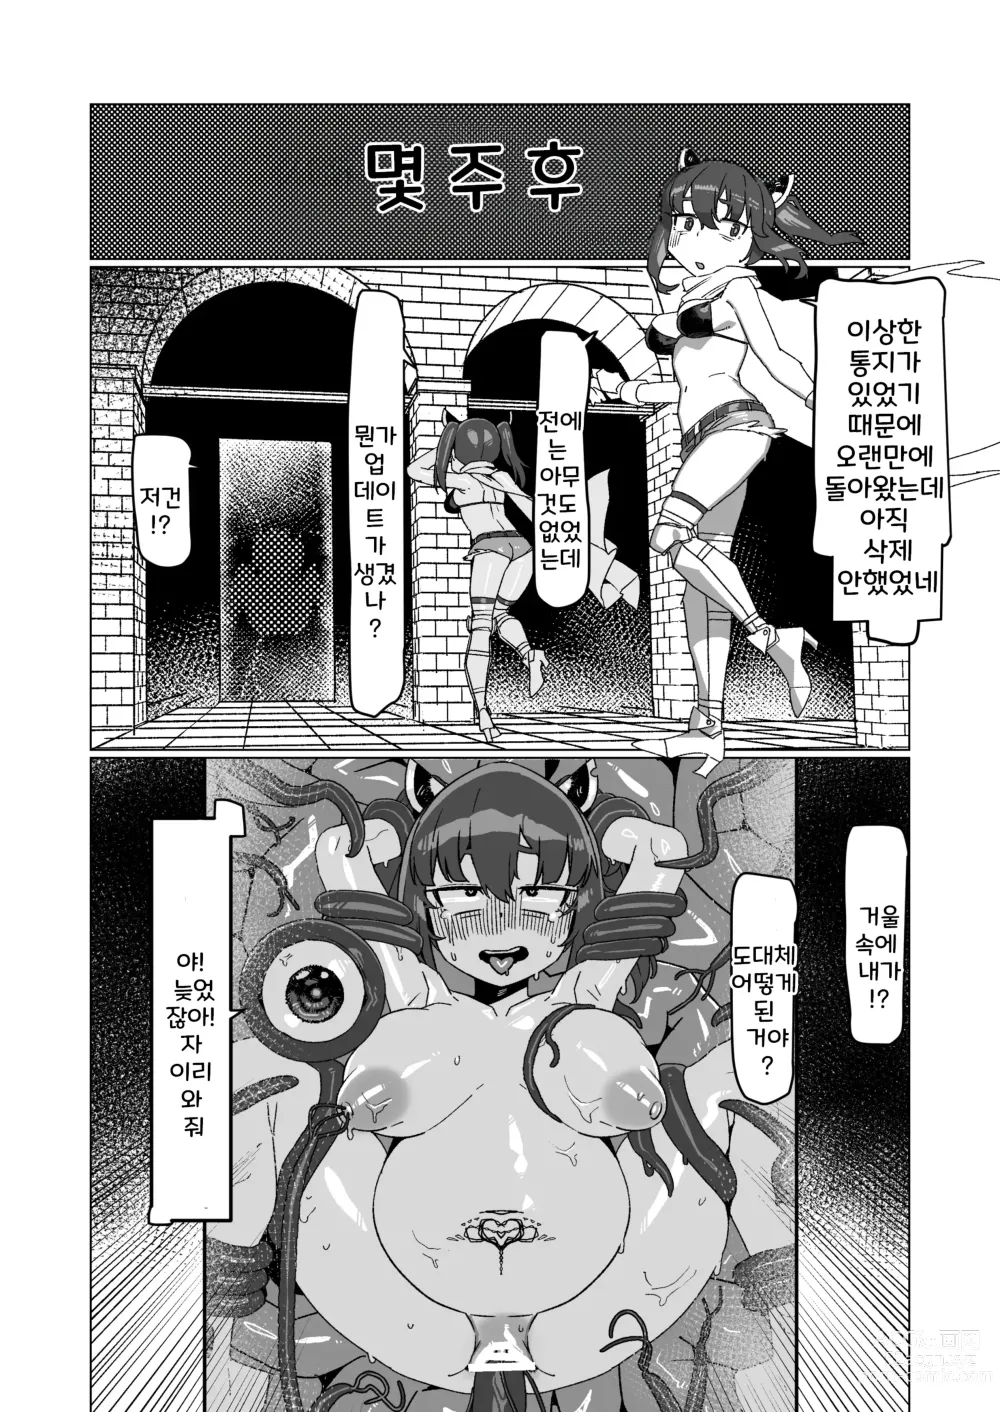 Page 24 of doujinshi 자신을 토호쿠 키리타 라고 믿고있는 키리탄의 풀 다이브 VR 던전